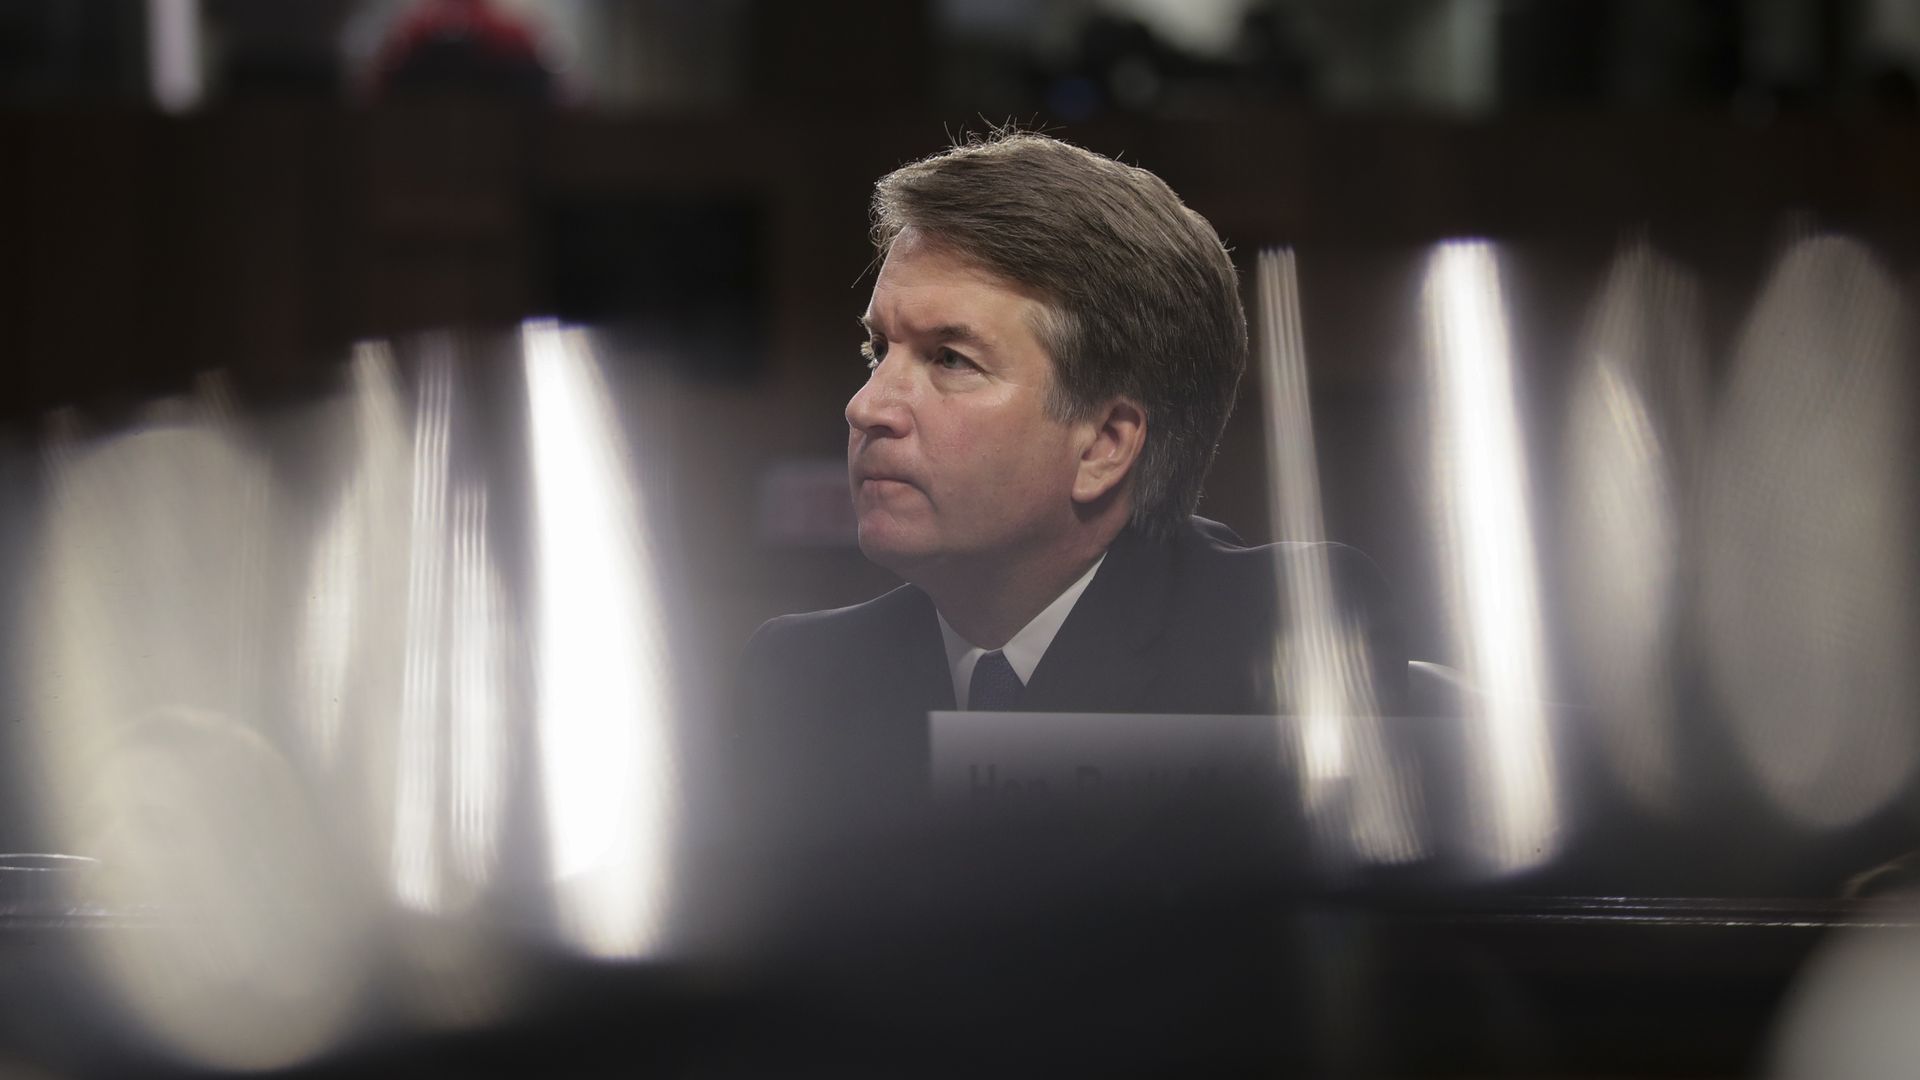 Supreme Court nominee Judge Brett Kavanaug. Photo: Drew Angerer/Getty Images